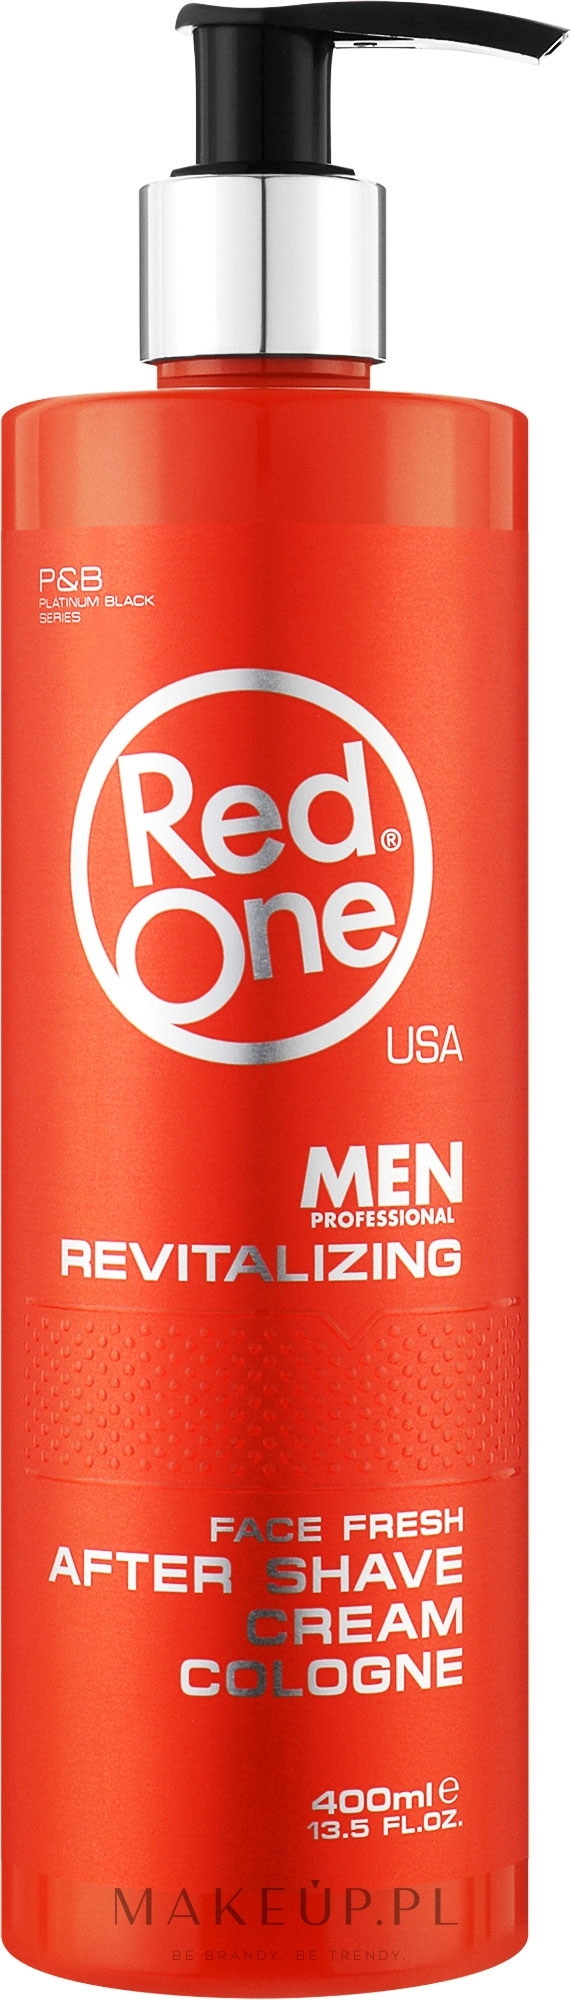 Perfumowany krem po goleniu - RedOne Aftershave Cream Cologne Revitalizing — Zdjęcie 400 ml